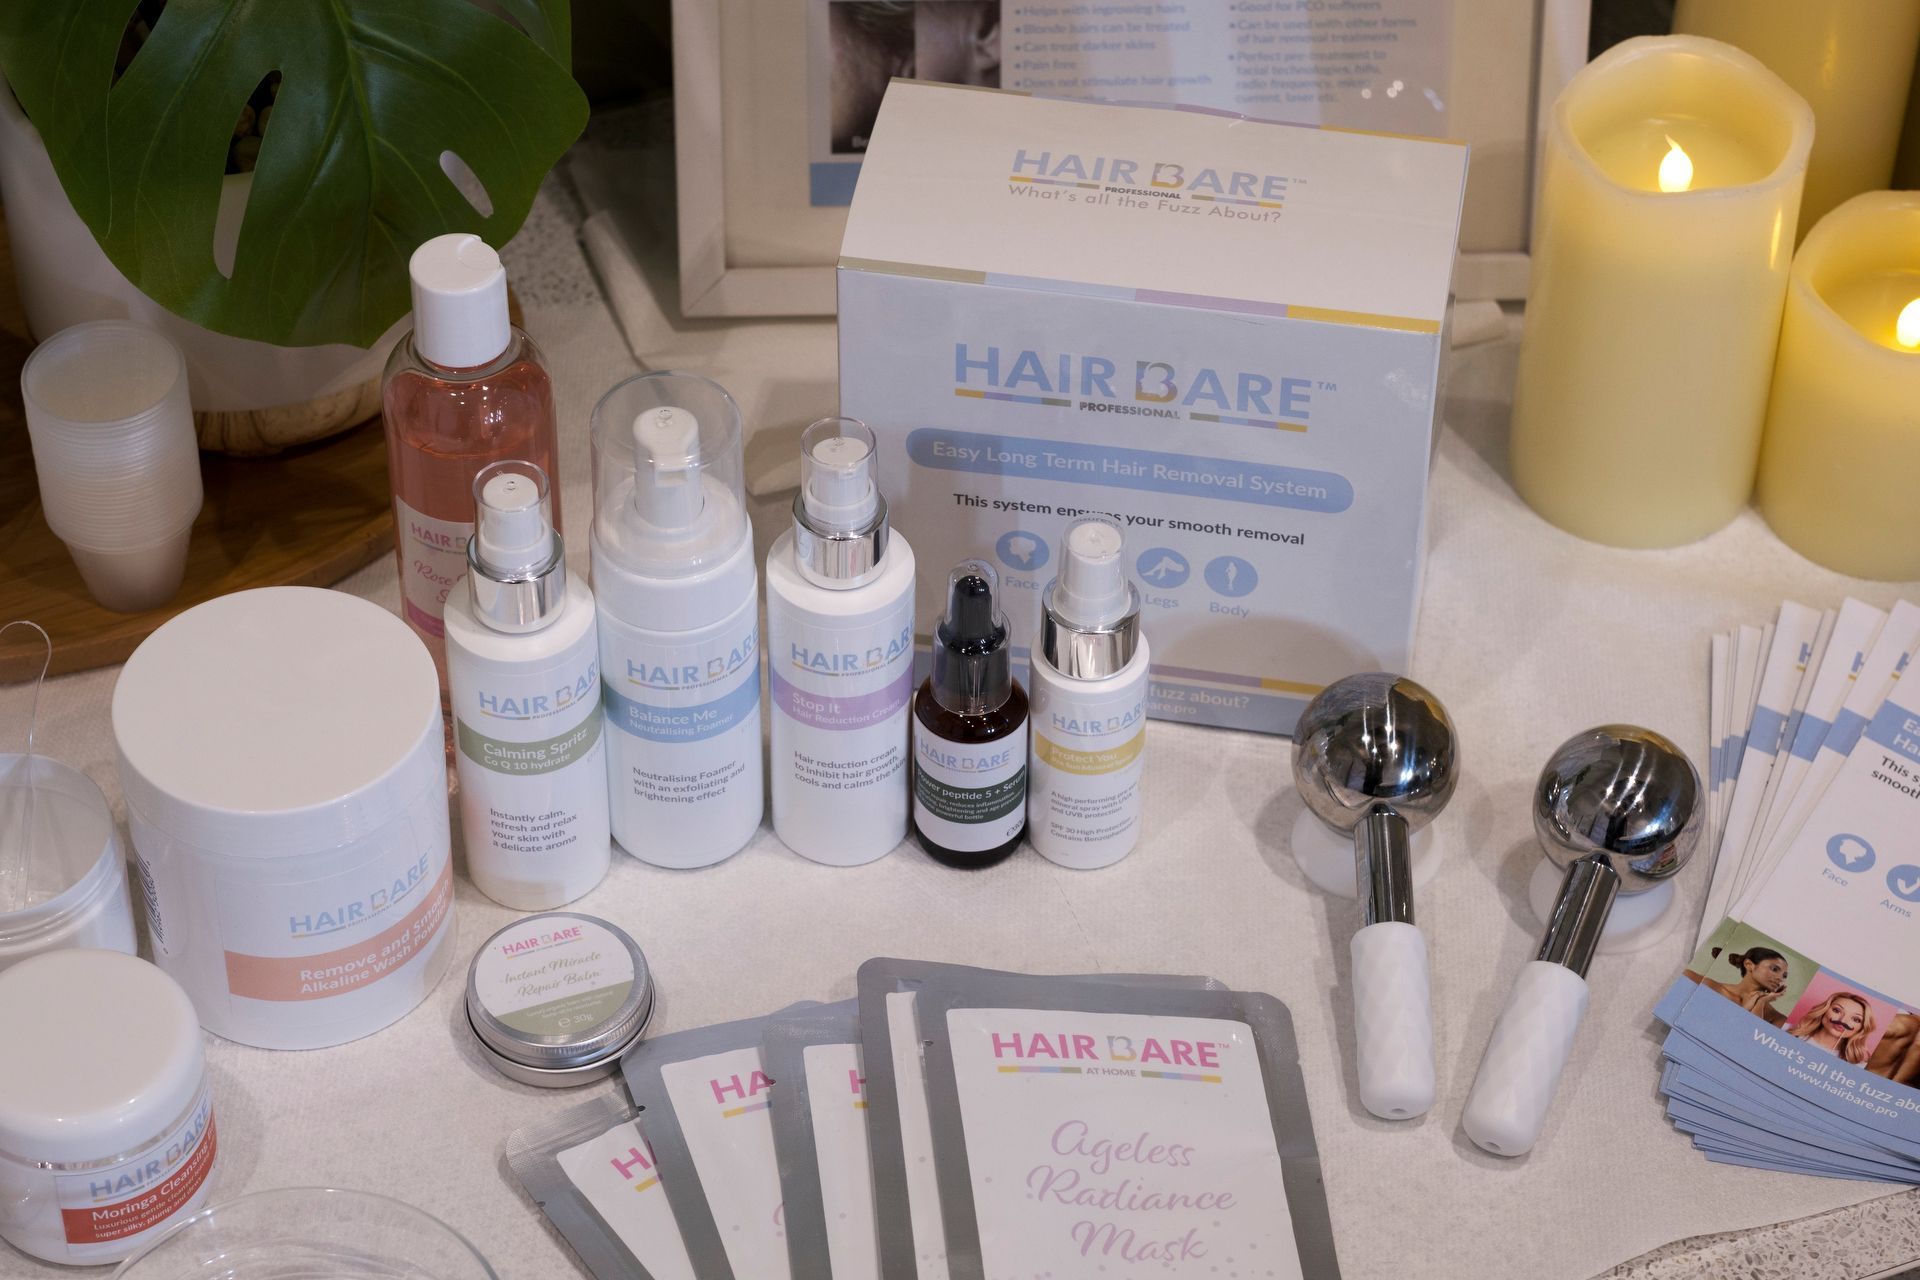 The Hair Bare Pro Alkaline Wash kit layout
